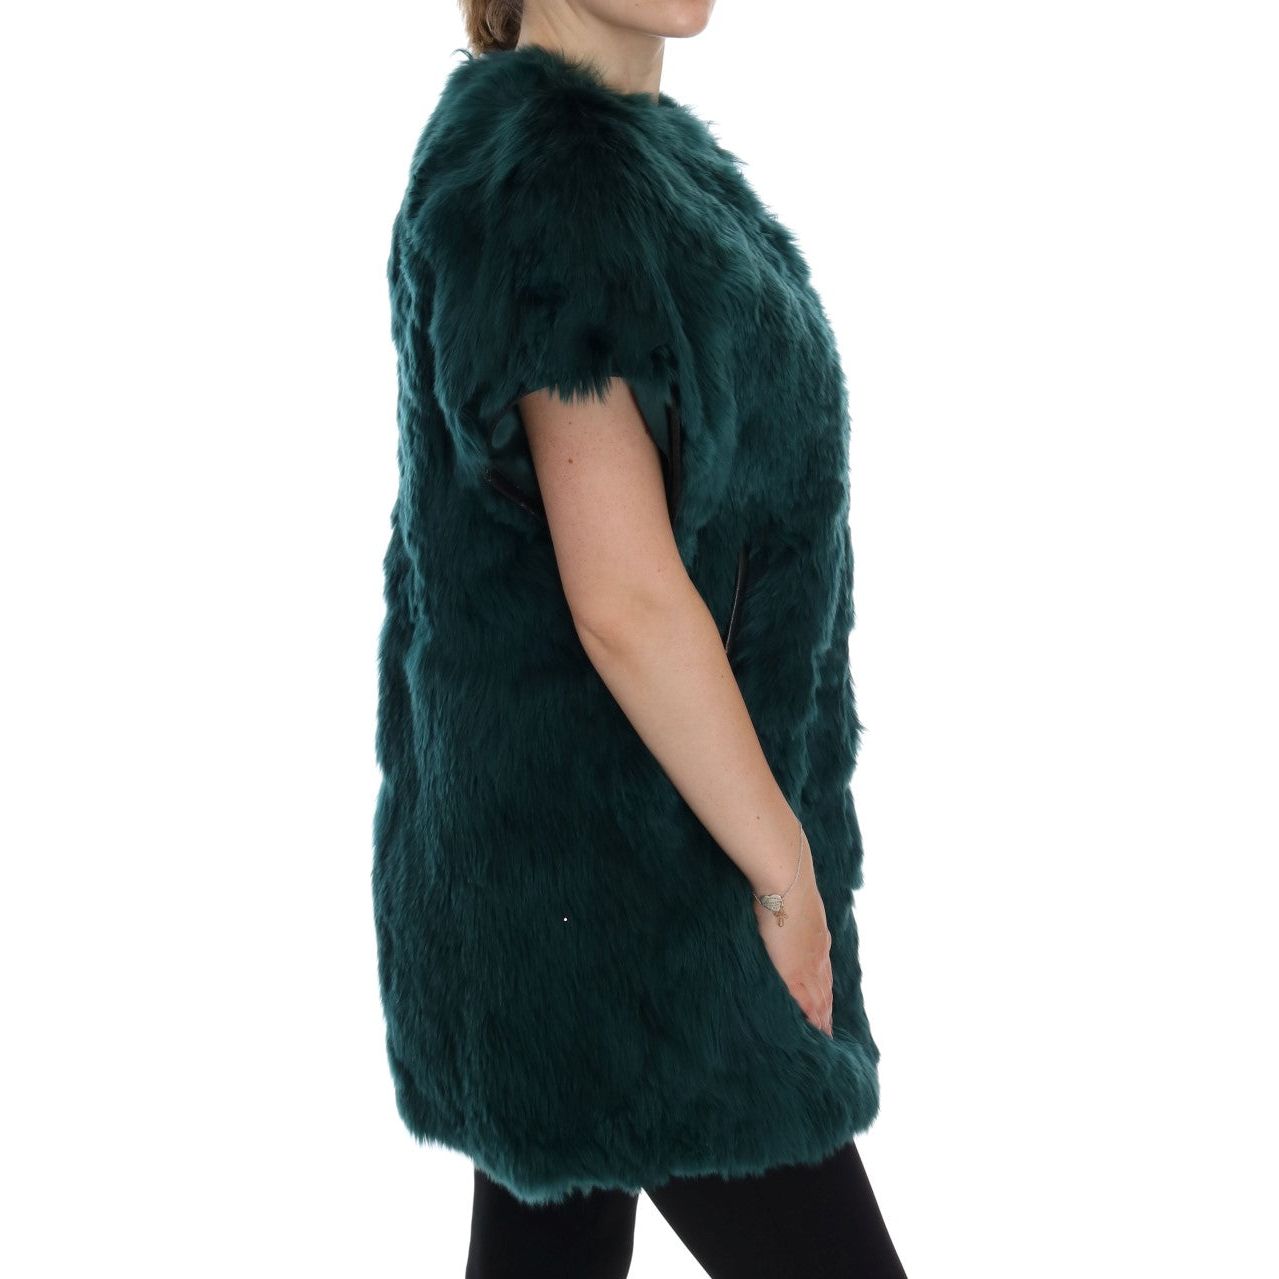 Dolce & Gabbana Exquisite Green Alpaca Fur Long Vest Coats & Jackets green-alpaca-fur-vest-sleeveless-jacket